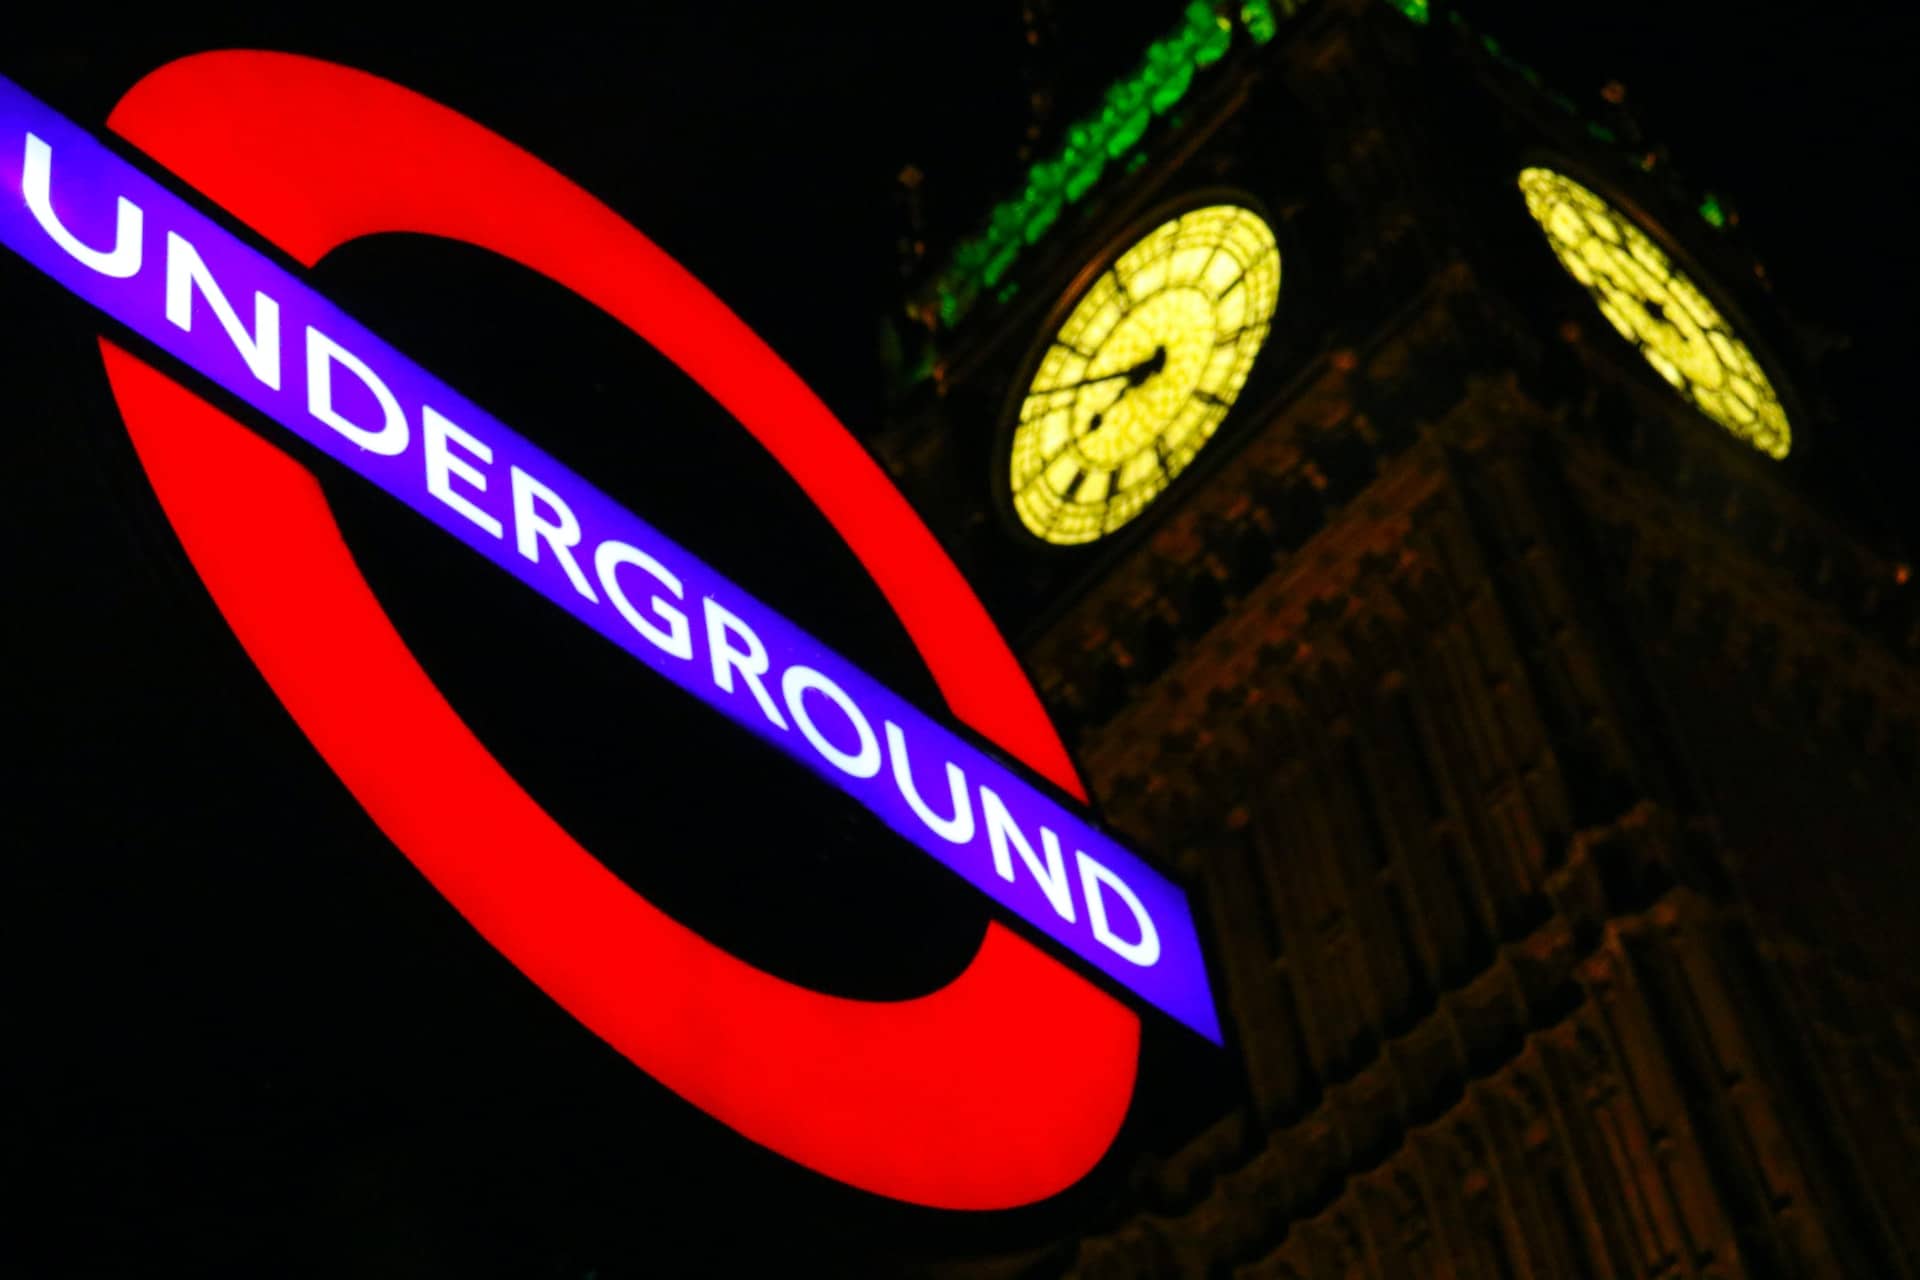 London Underground Subway